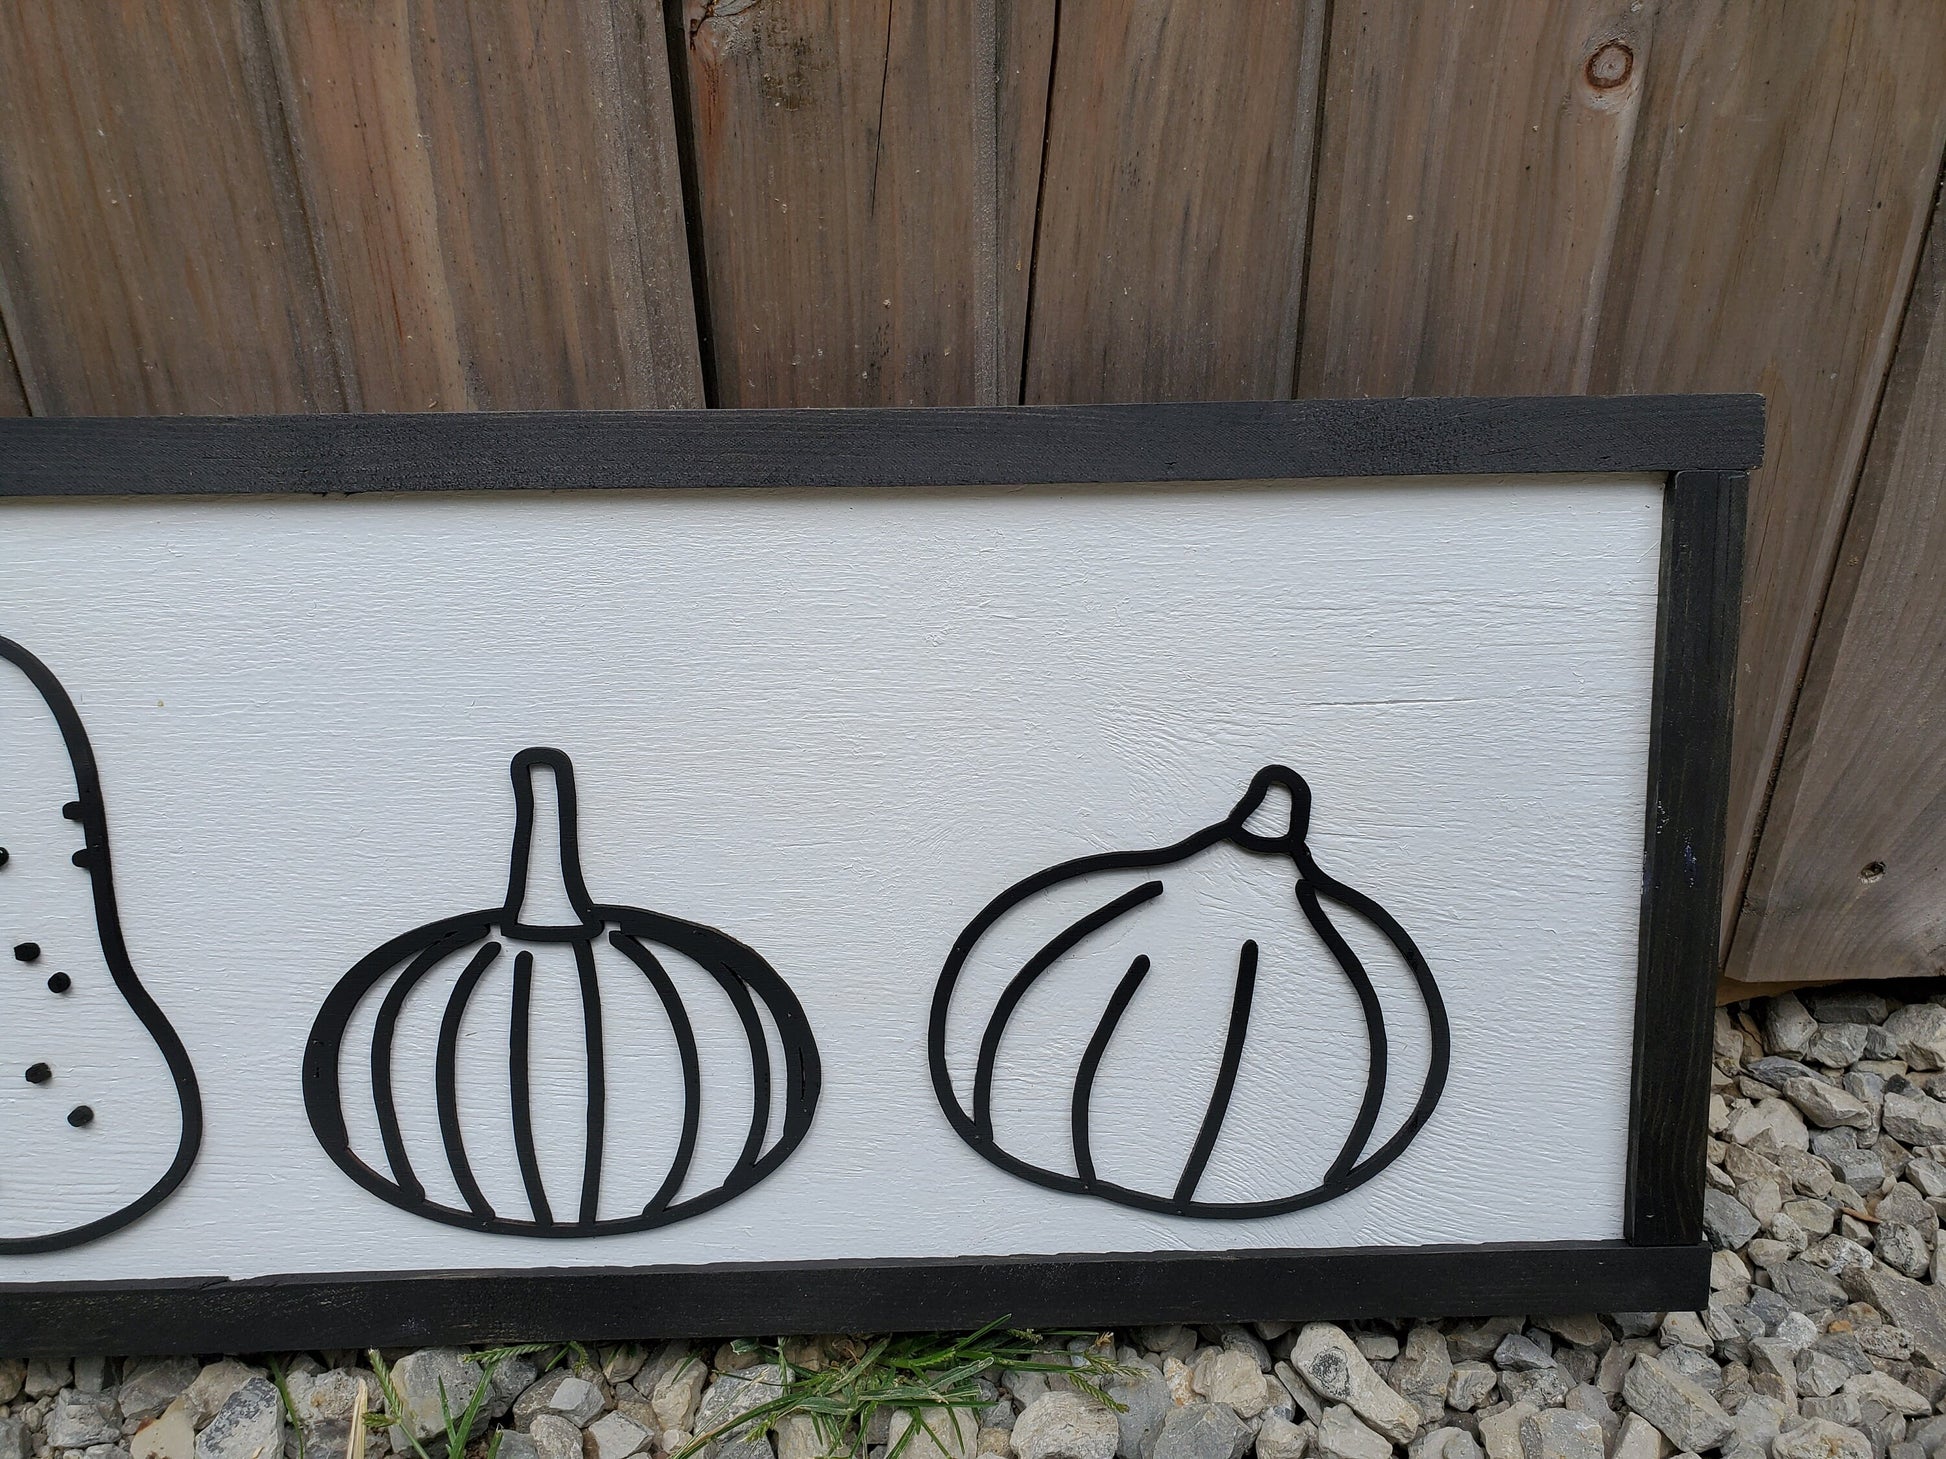 Pumpkins, Gourds, Squash, Fall, Autumn, Halloween, Line Art, 3D, Raised Text Sign, Rustic, Farmhouse, Shabby Chic, Wood, Black and White